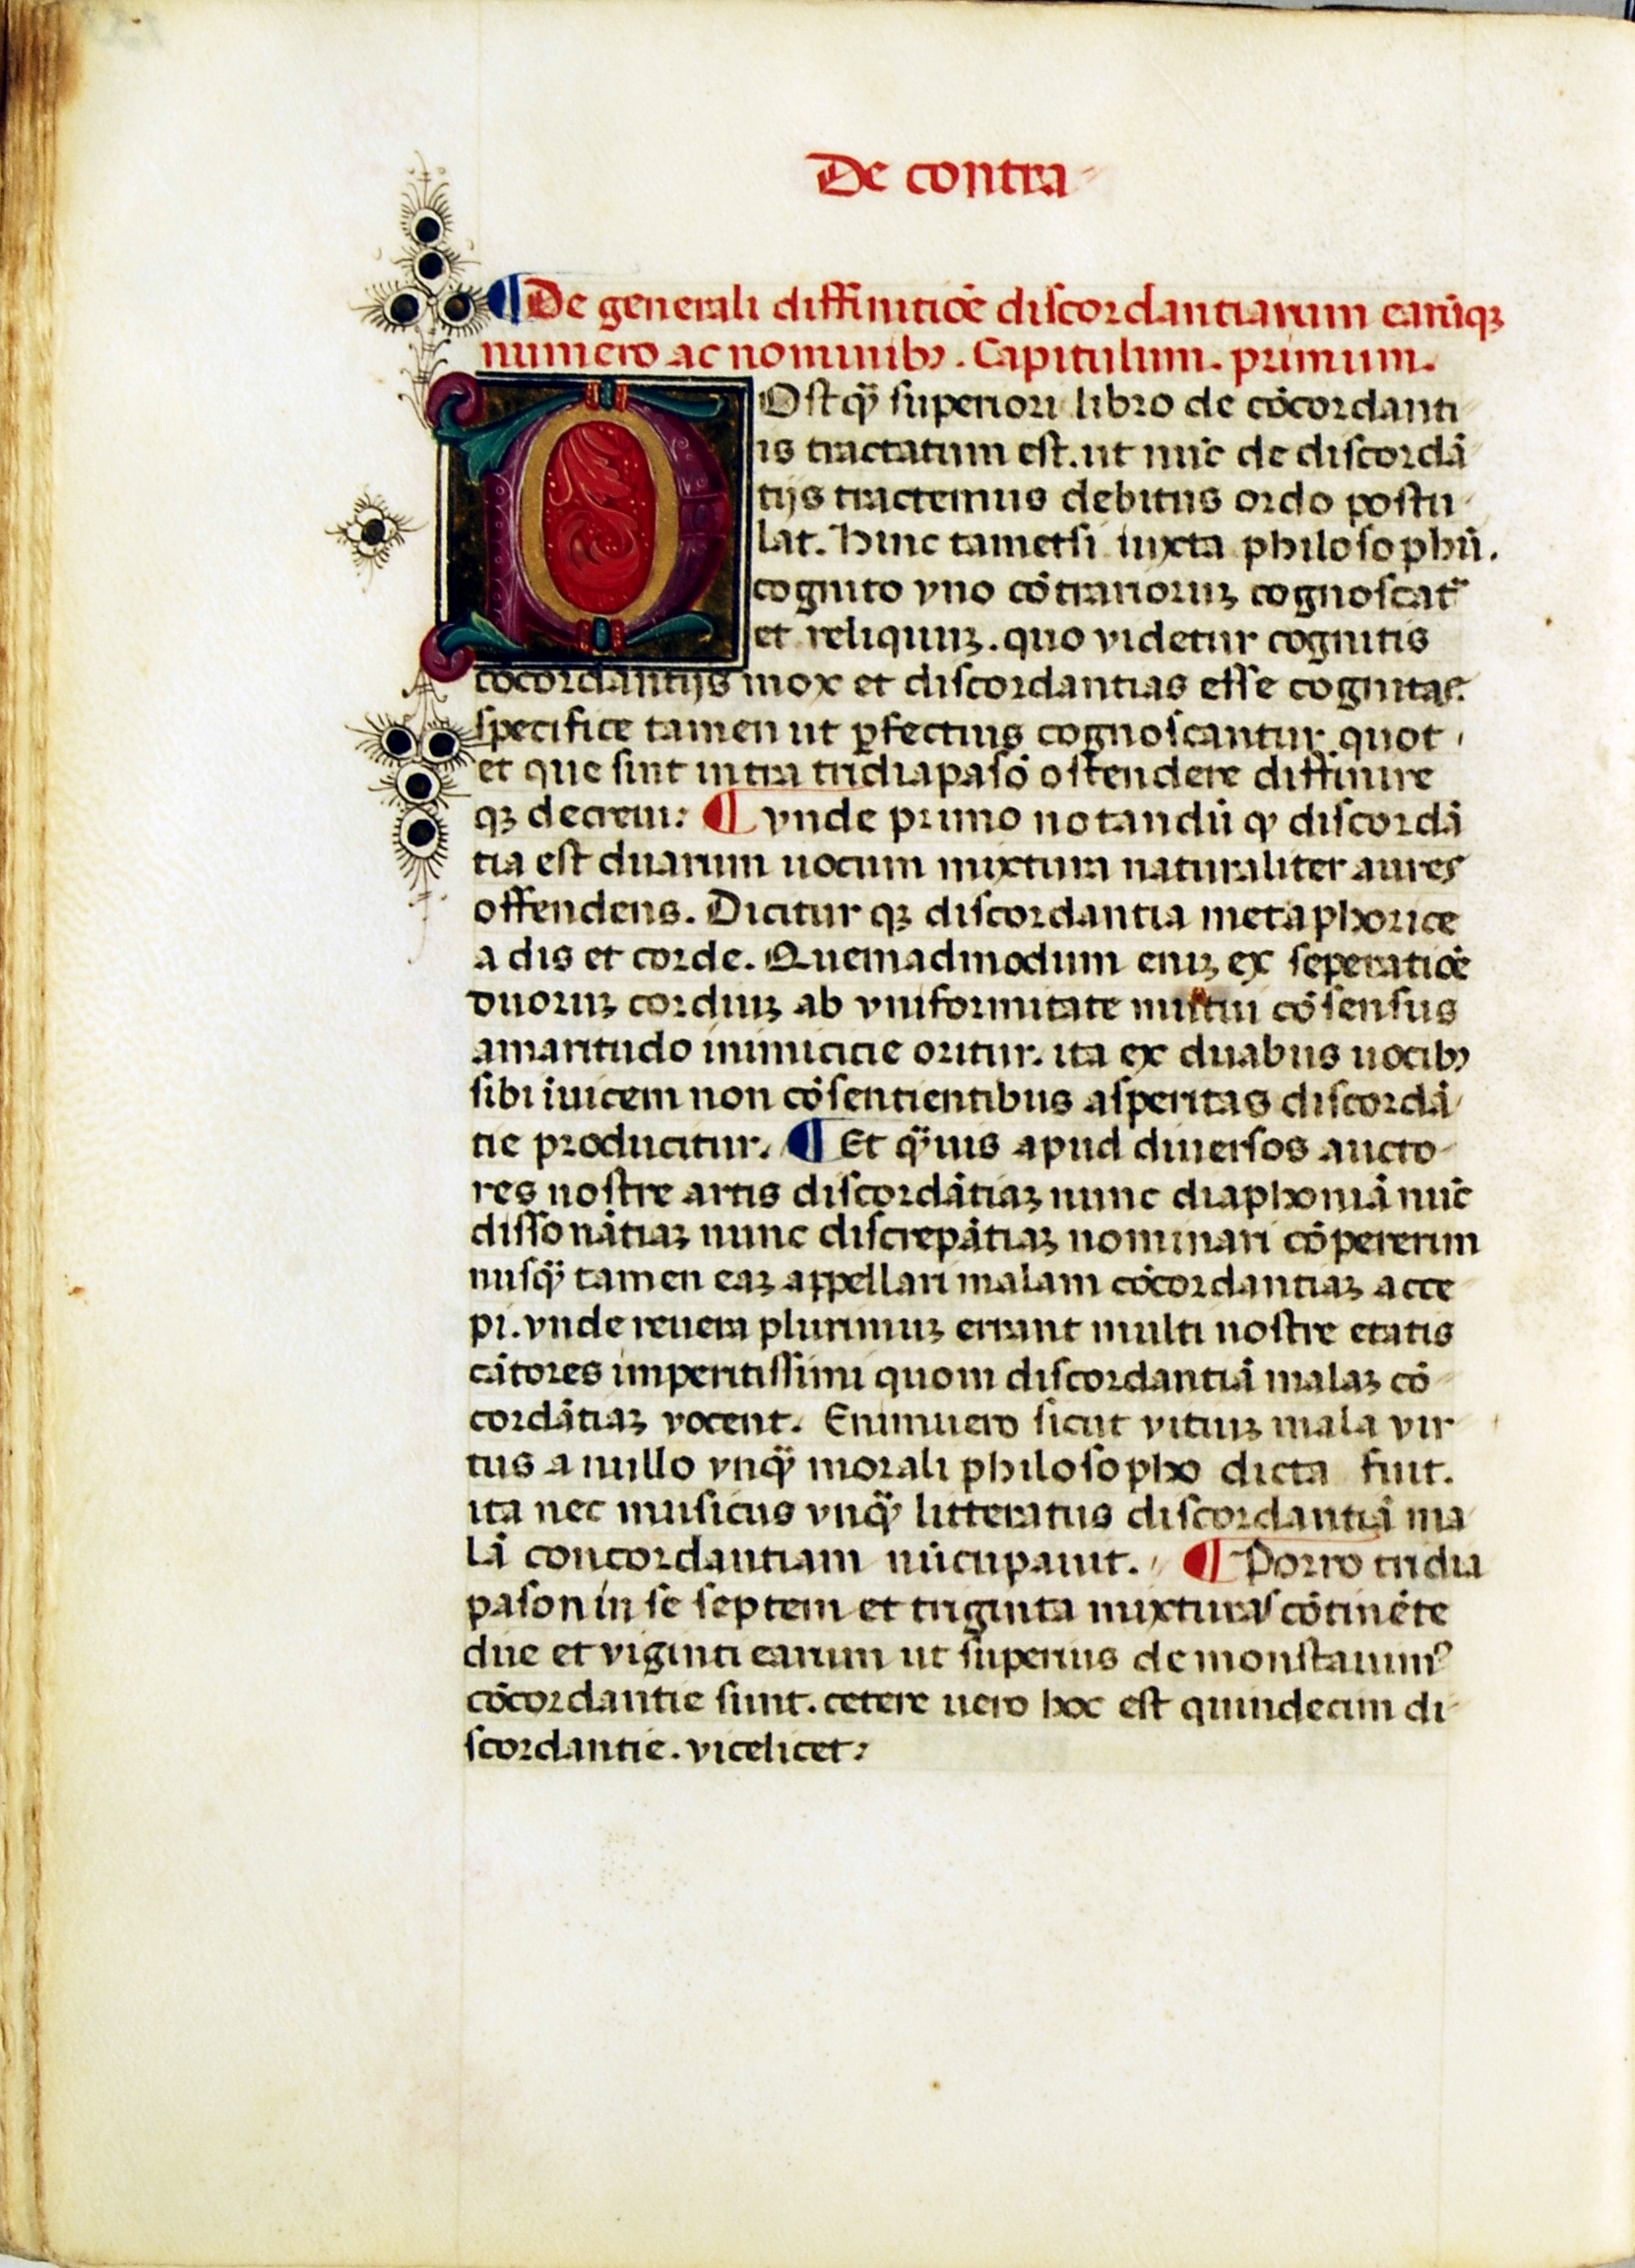 Bologna, Biblioteca Universitaria, MS 2573, fol. 133v. Source: Biblioteca Universitaria, Bologna.